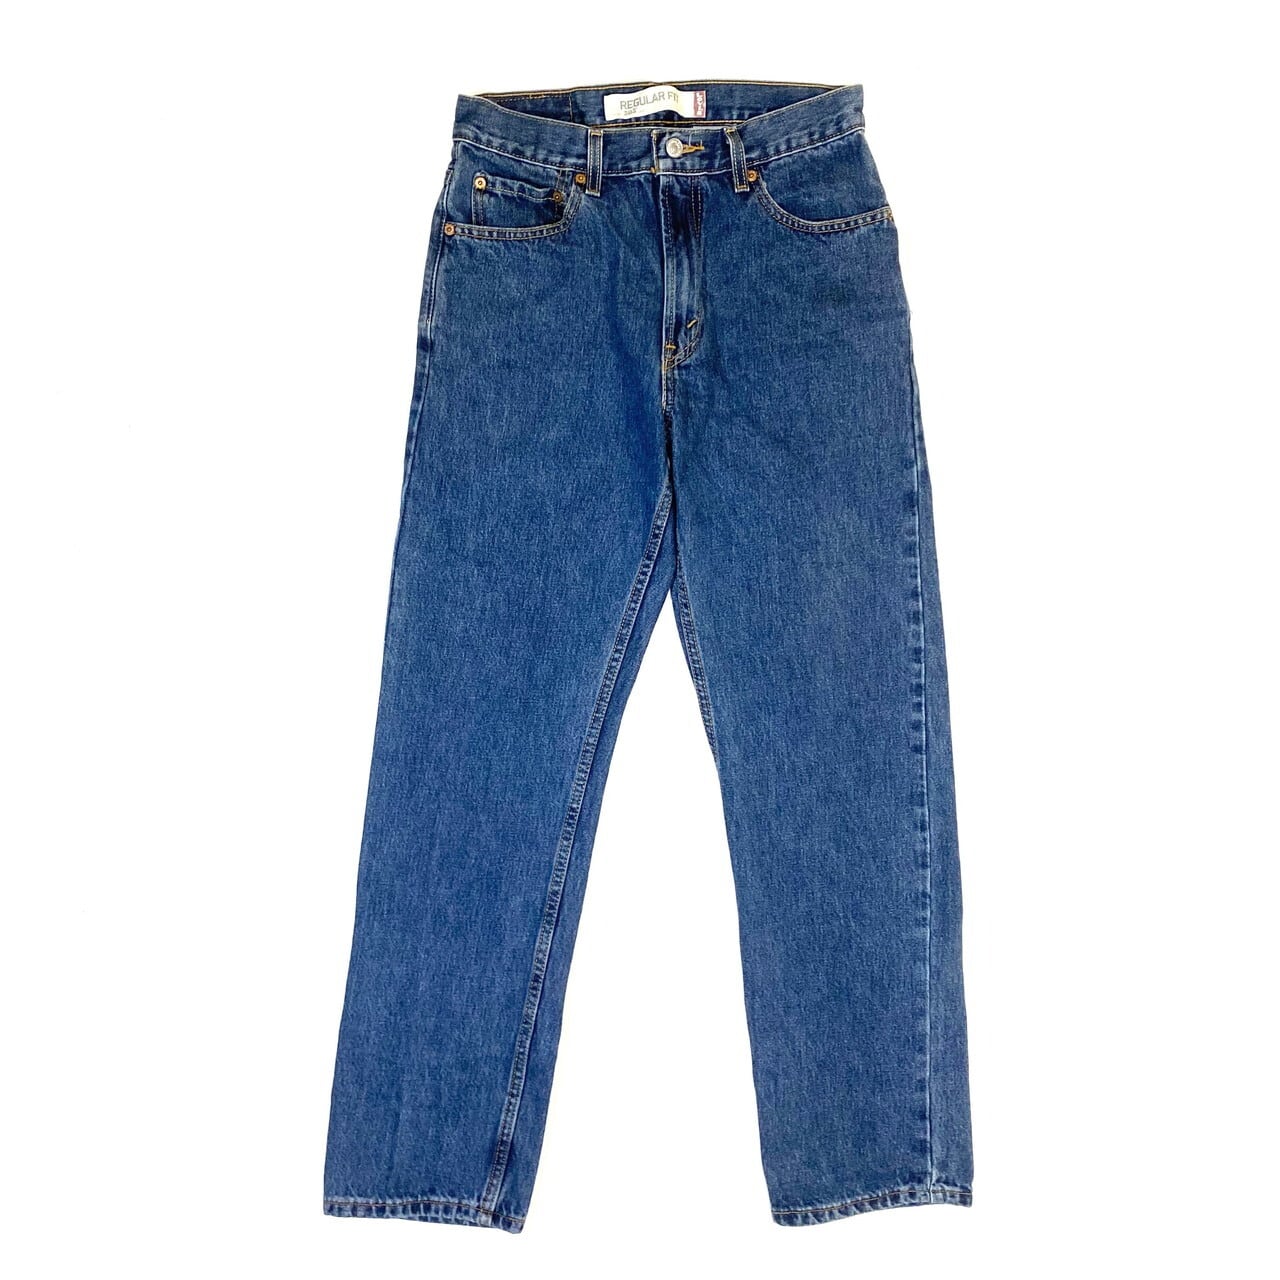 Levi's Jeans 505 W32 L34